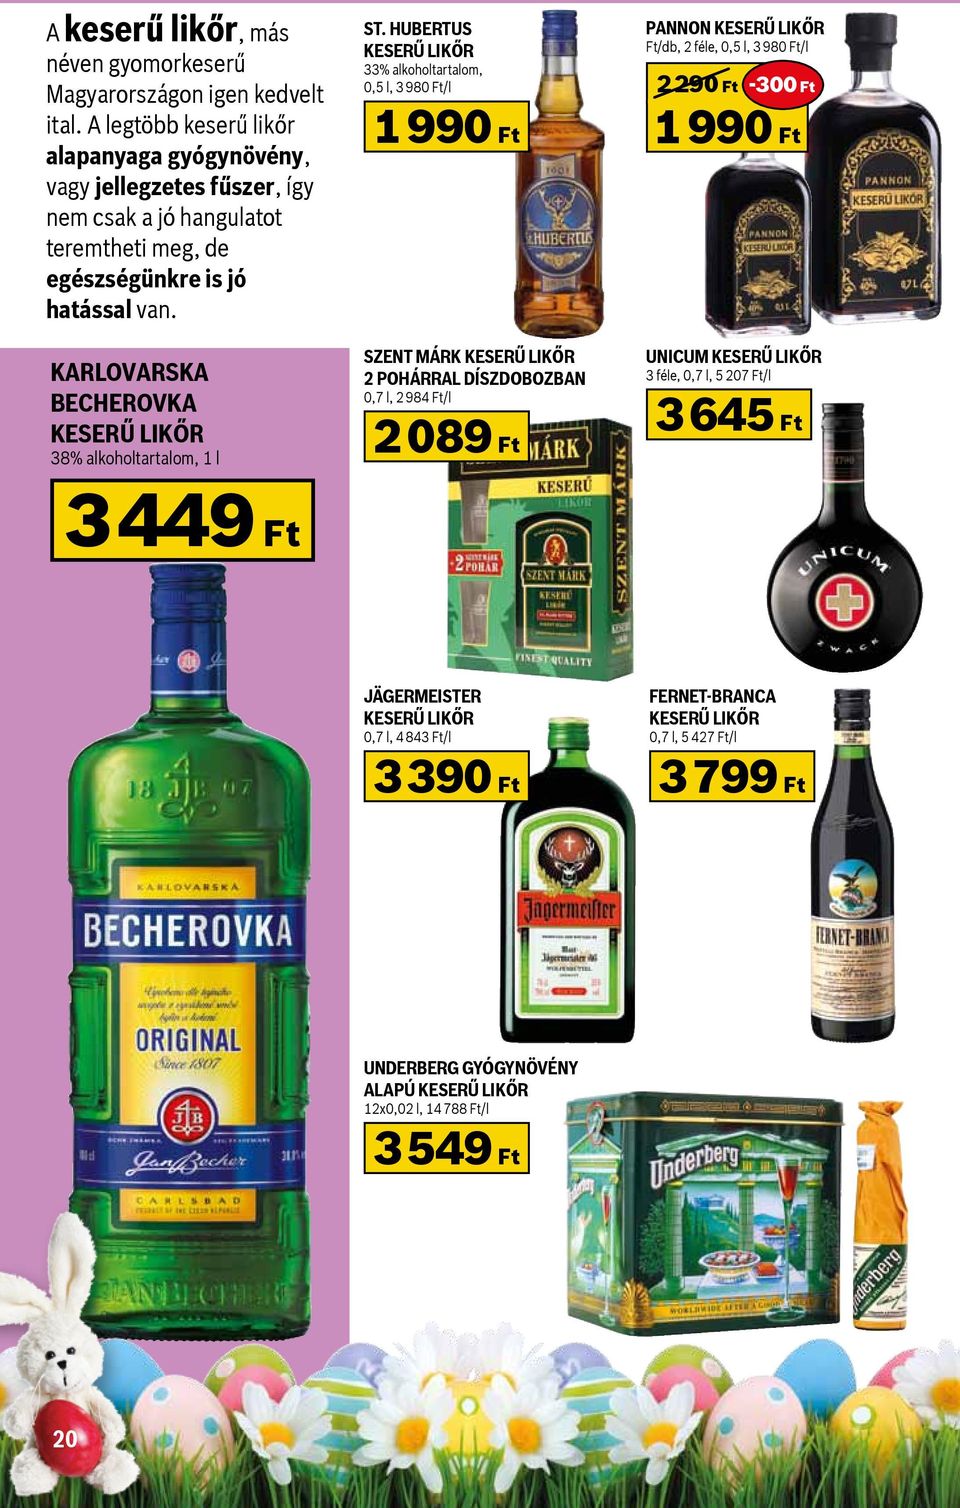 Karlovarska Becherovka keserű likőr 38% alkoholtartalom, 1 l St.